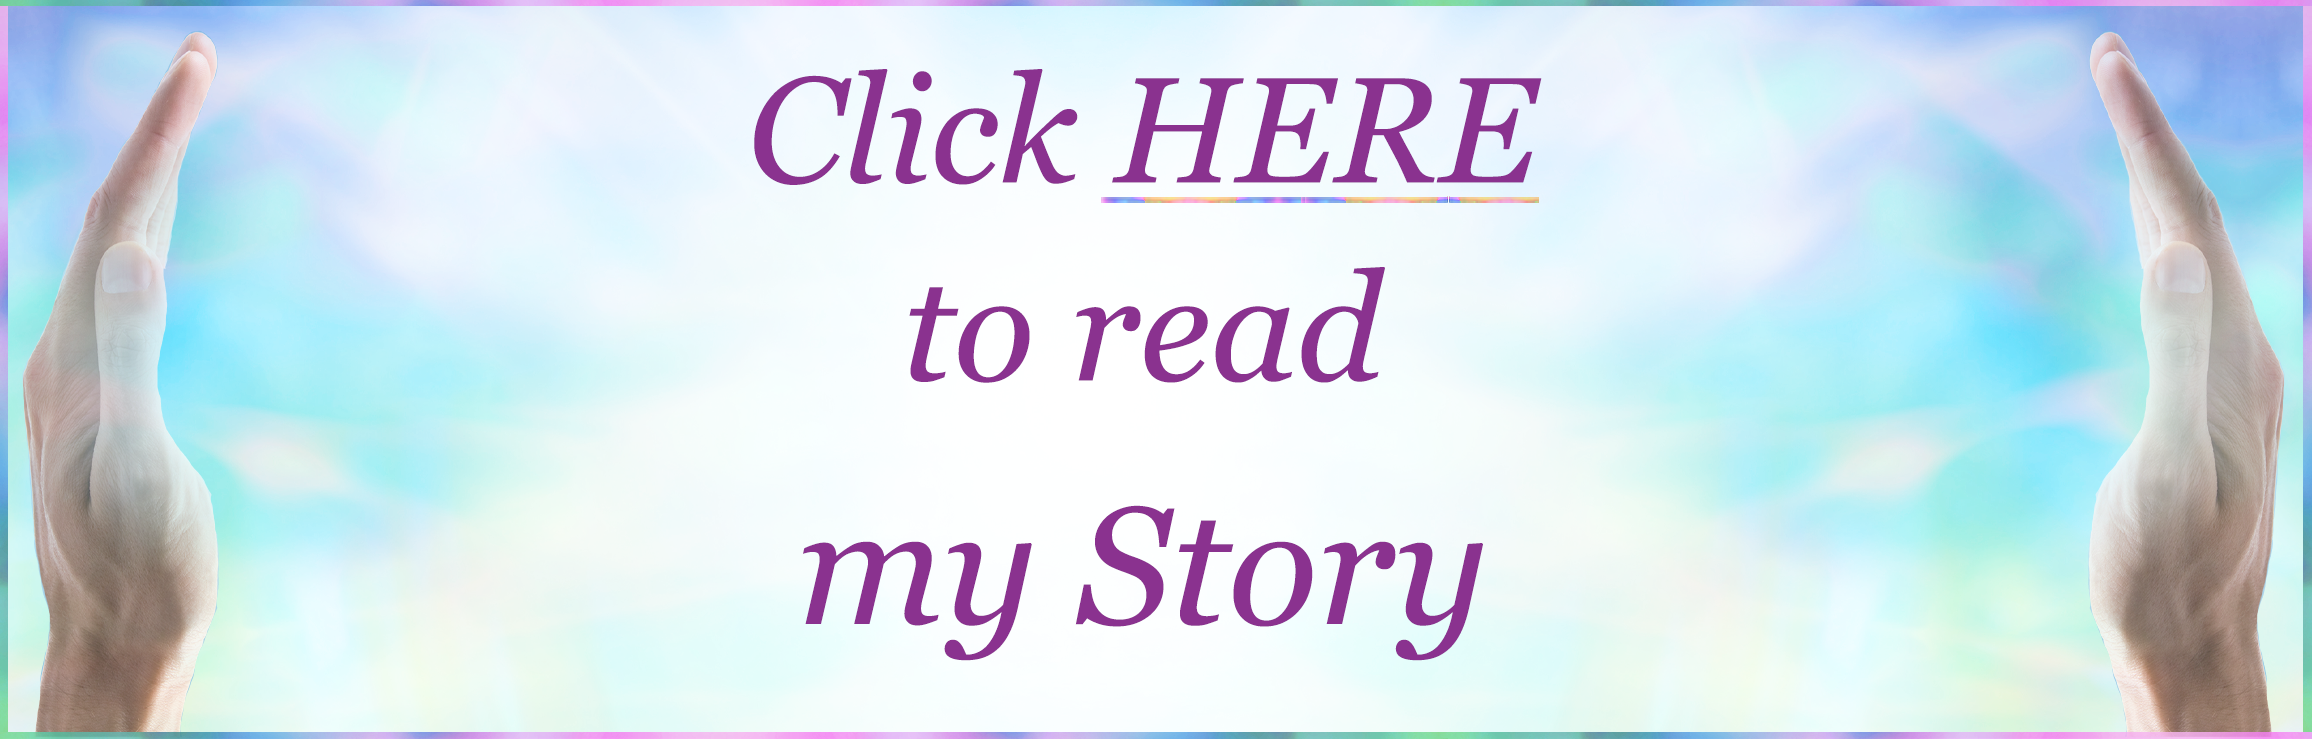 Healing rainbow hands Button - My Story